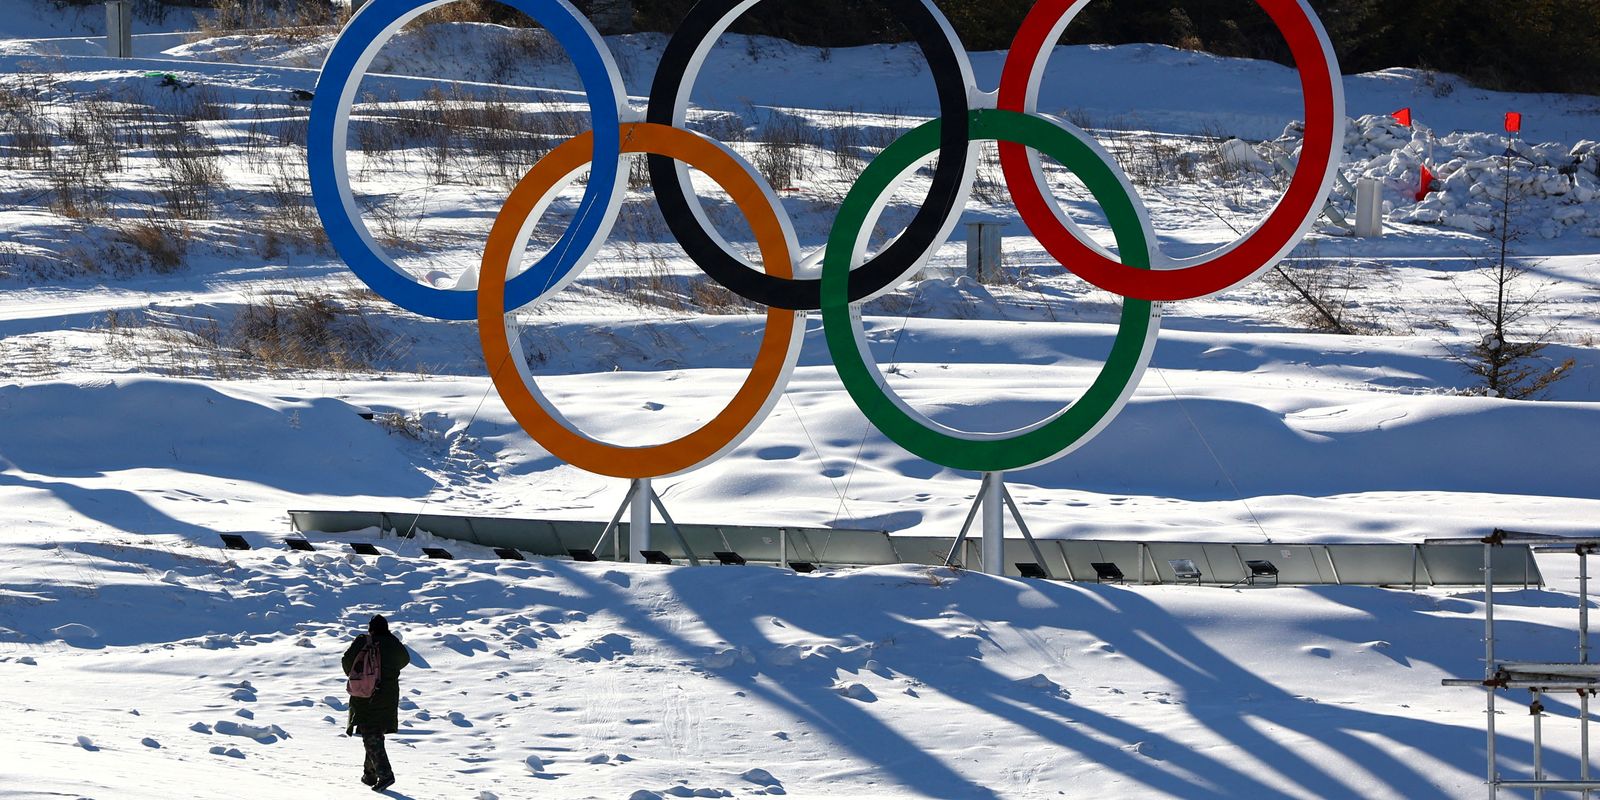 brasil-tera-17-atletas-nos-jogos-olimpicos-de-inverno-da-juventude